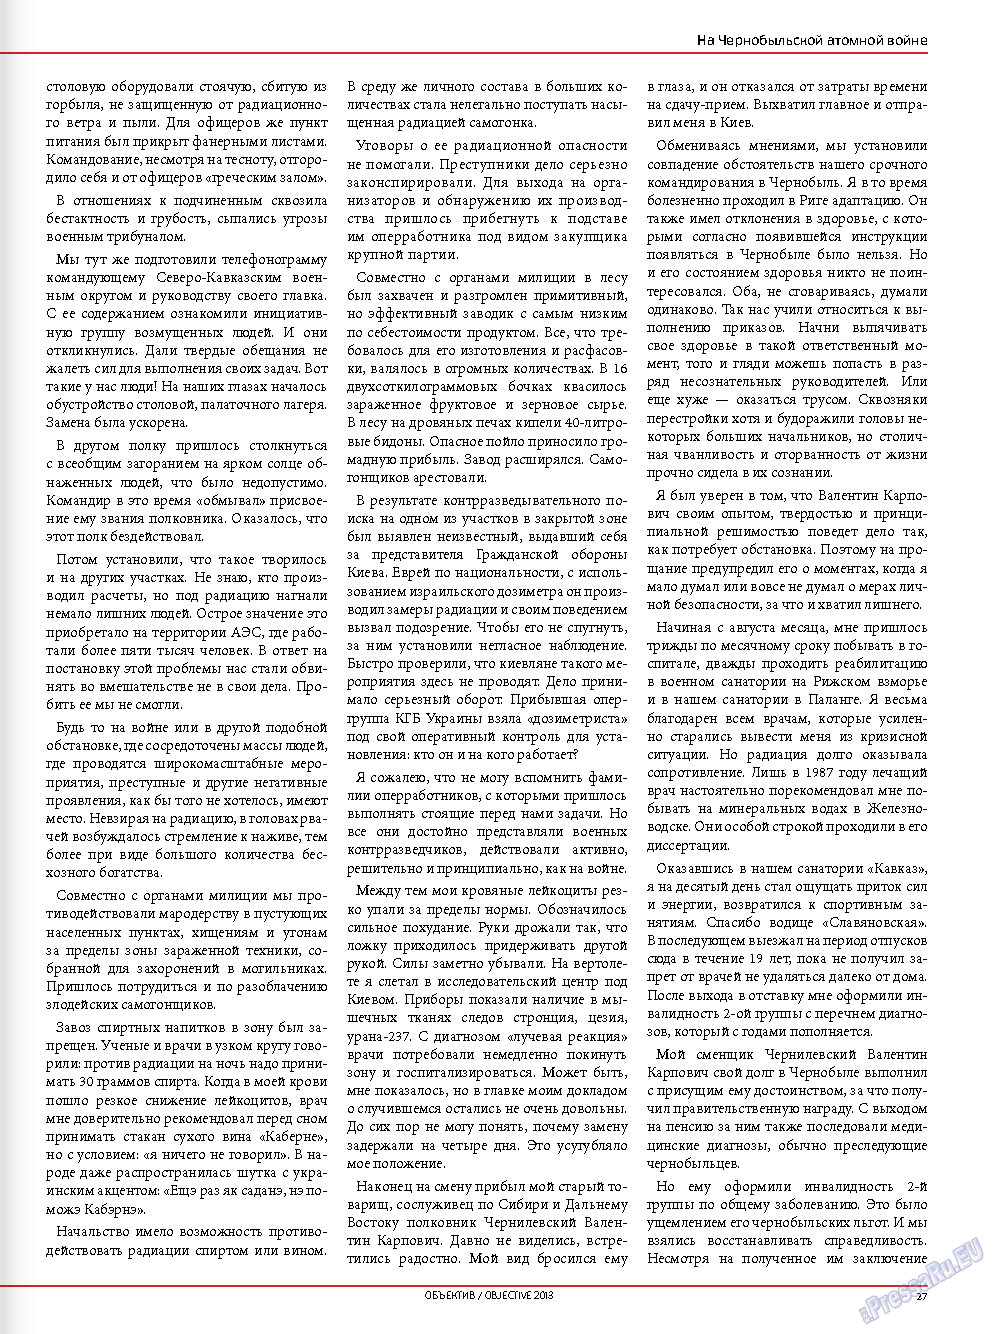 Объектив EU (журнал). 2013 год, номер 1, стр. 29